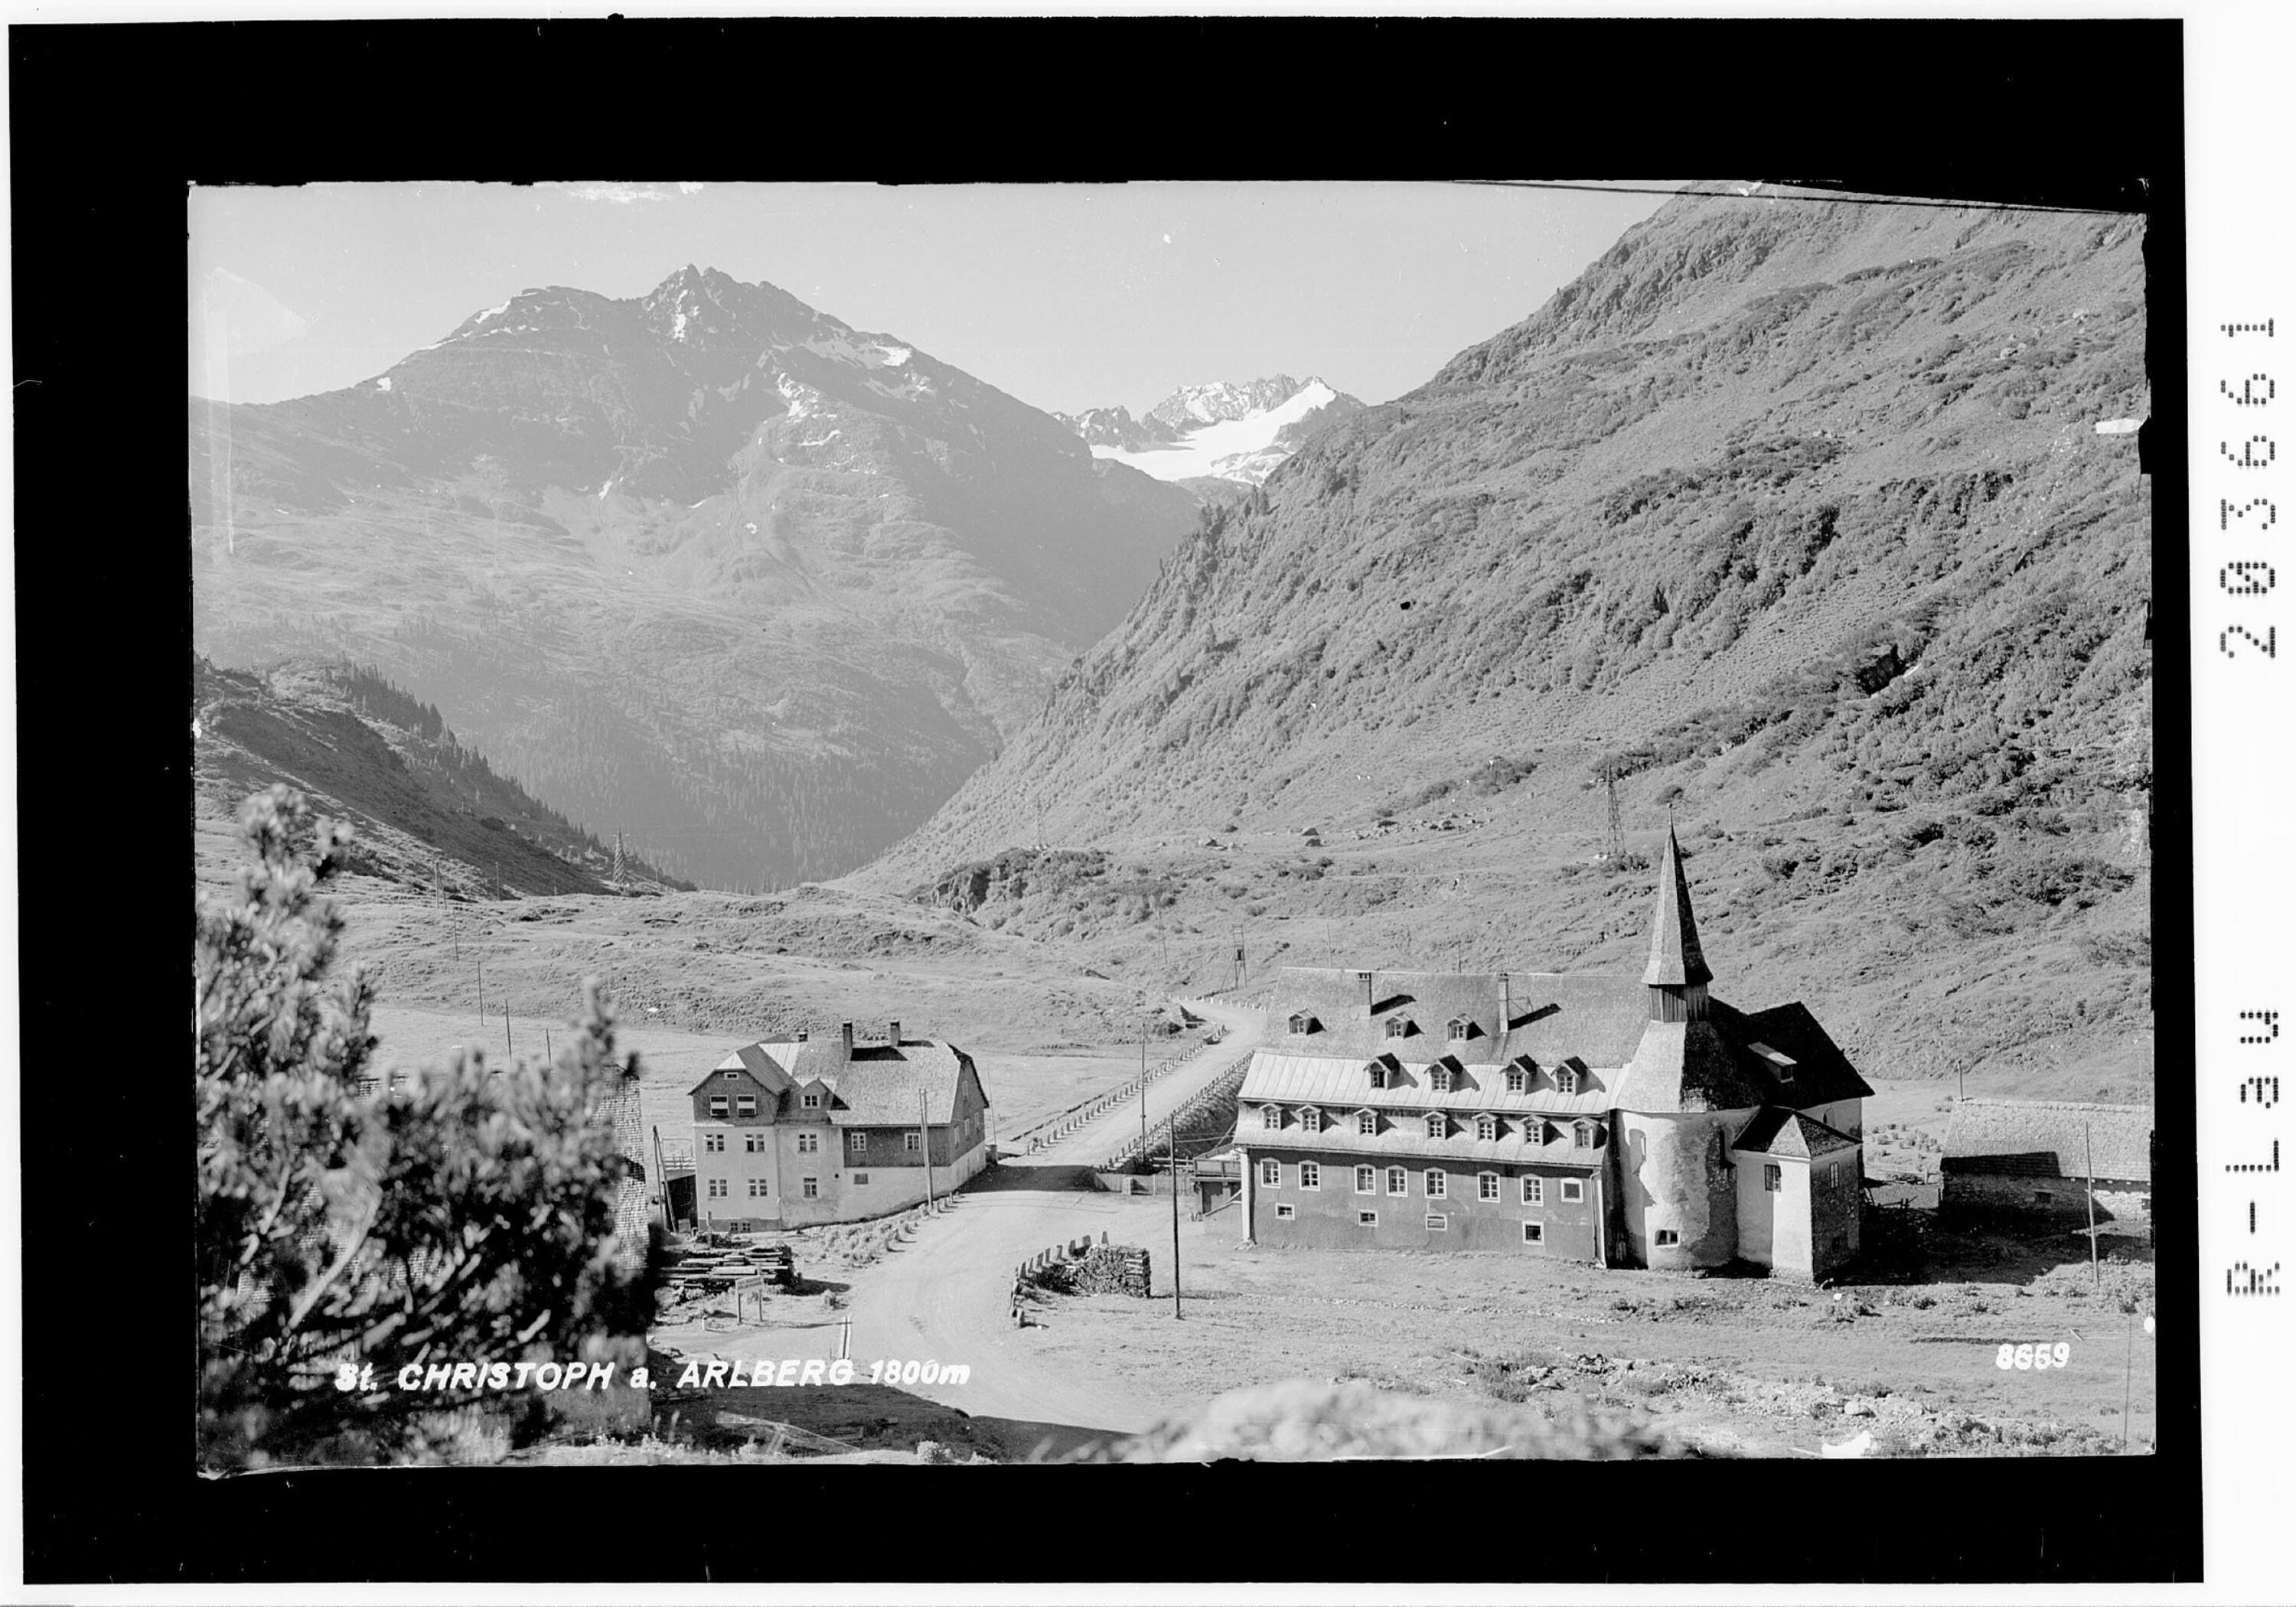 St.Christoph am Arlberg 1800 m></div>


    <hr>
    <div class=